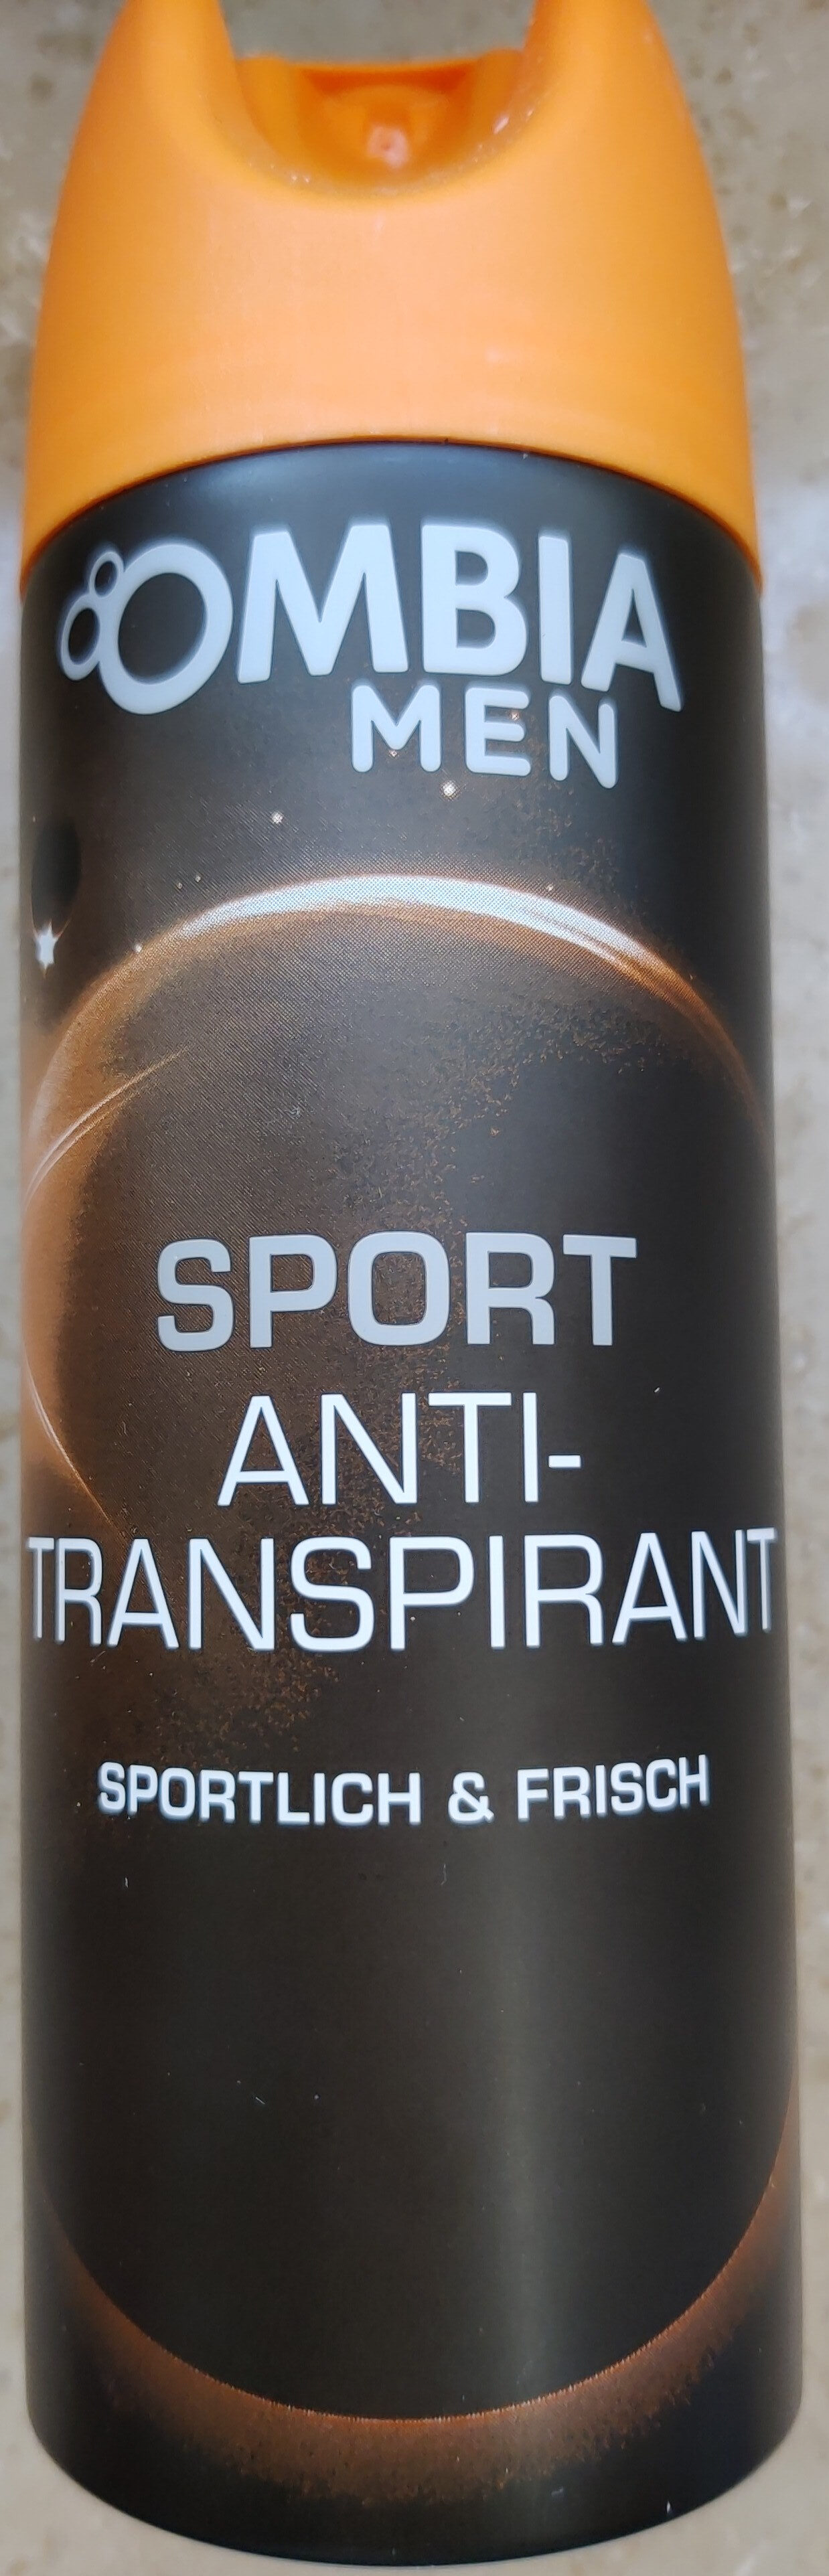 Sport Anti Transpirant - Produkt - de